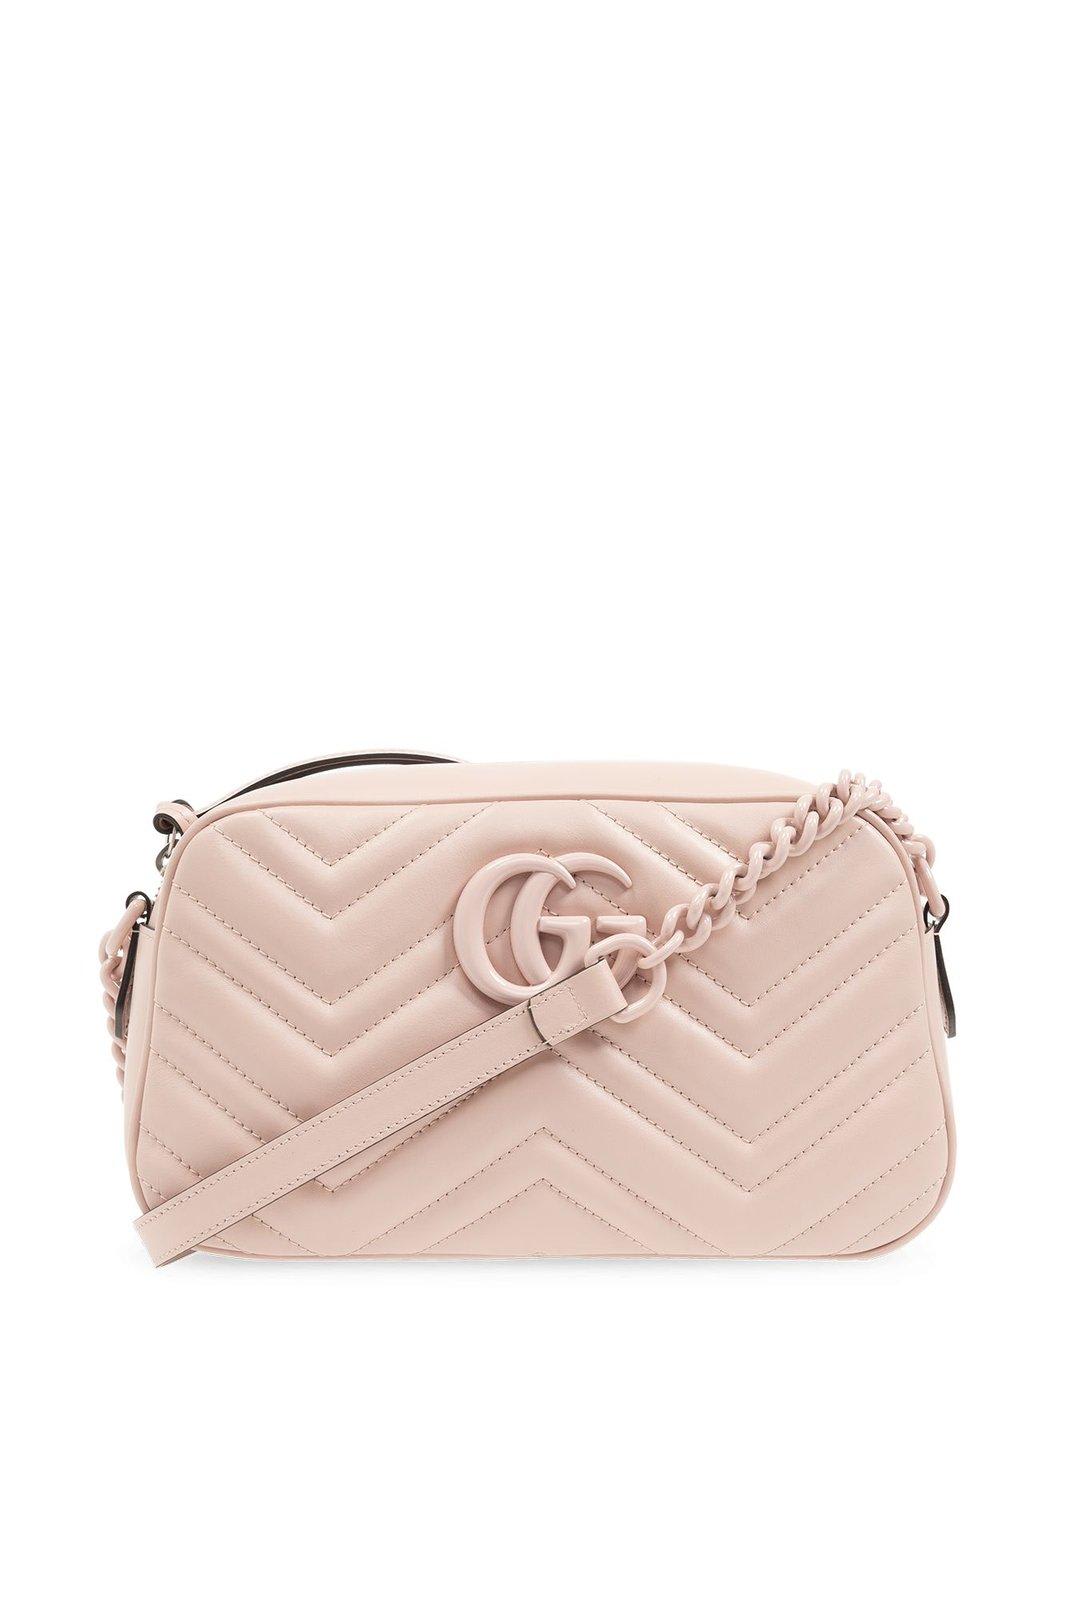 Gucci Gg Marmont Matelass Mall Shoulder Bag